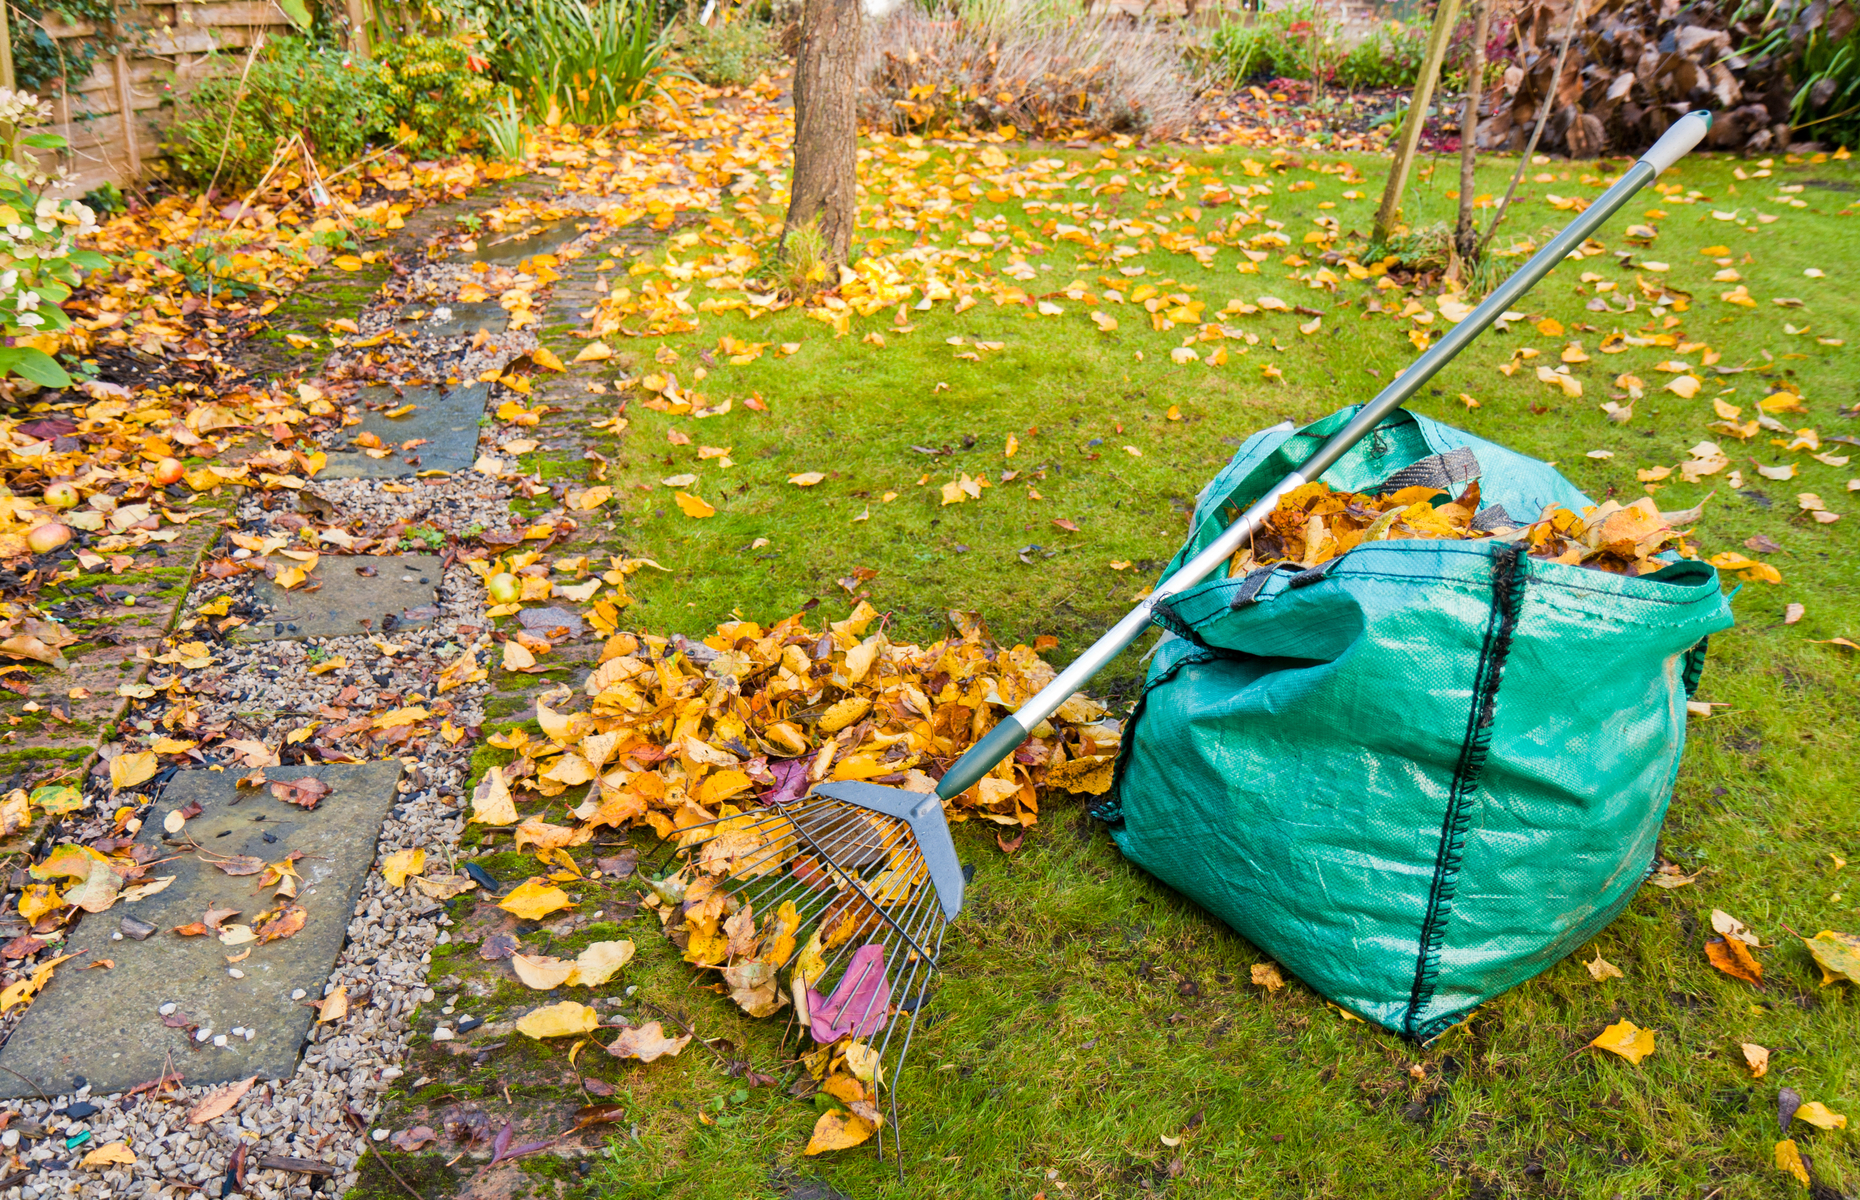 Yard cleaning. Уборка листьев. Уборка листвы в саду. Уборка в саду осенью. Уборка листьев с газона.